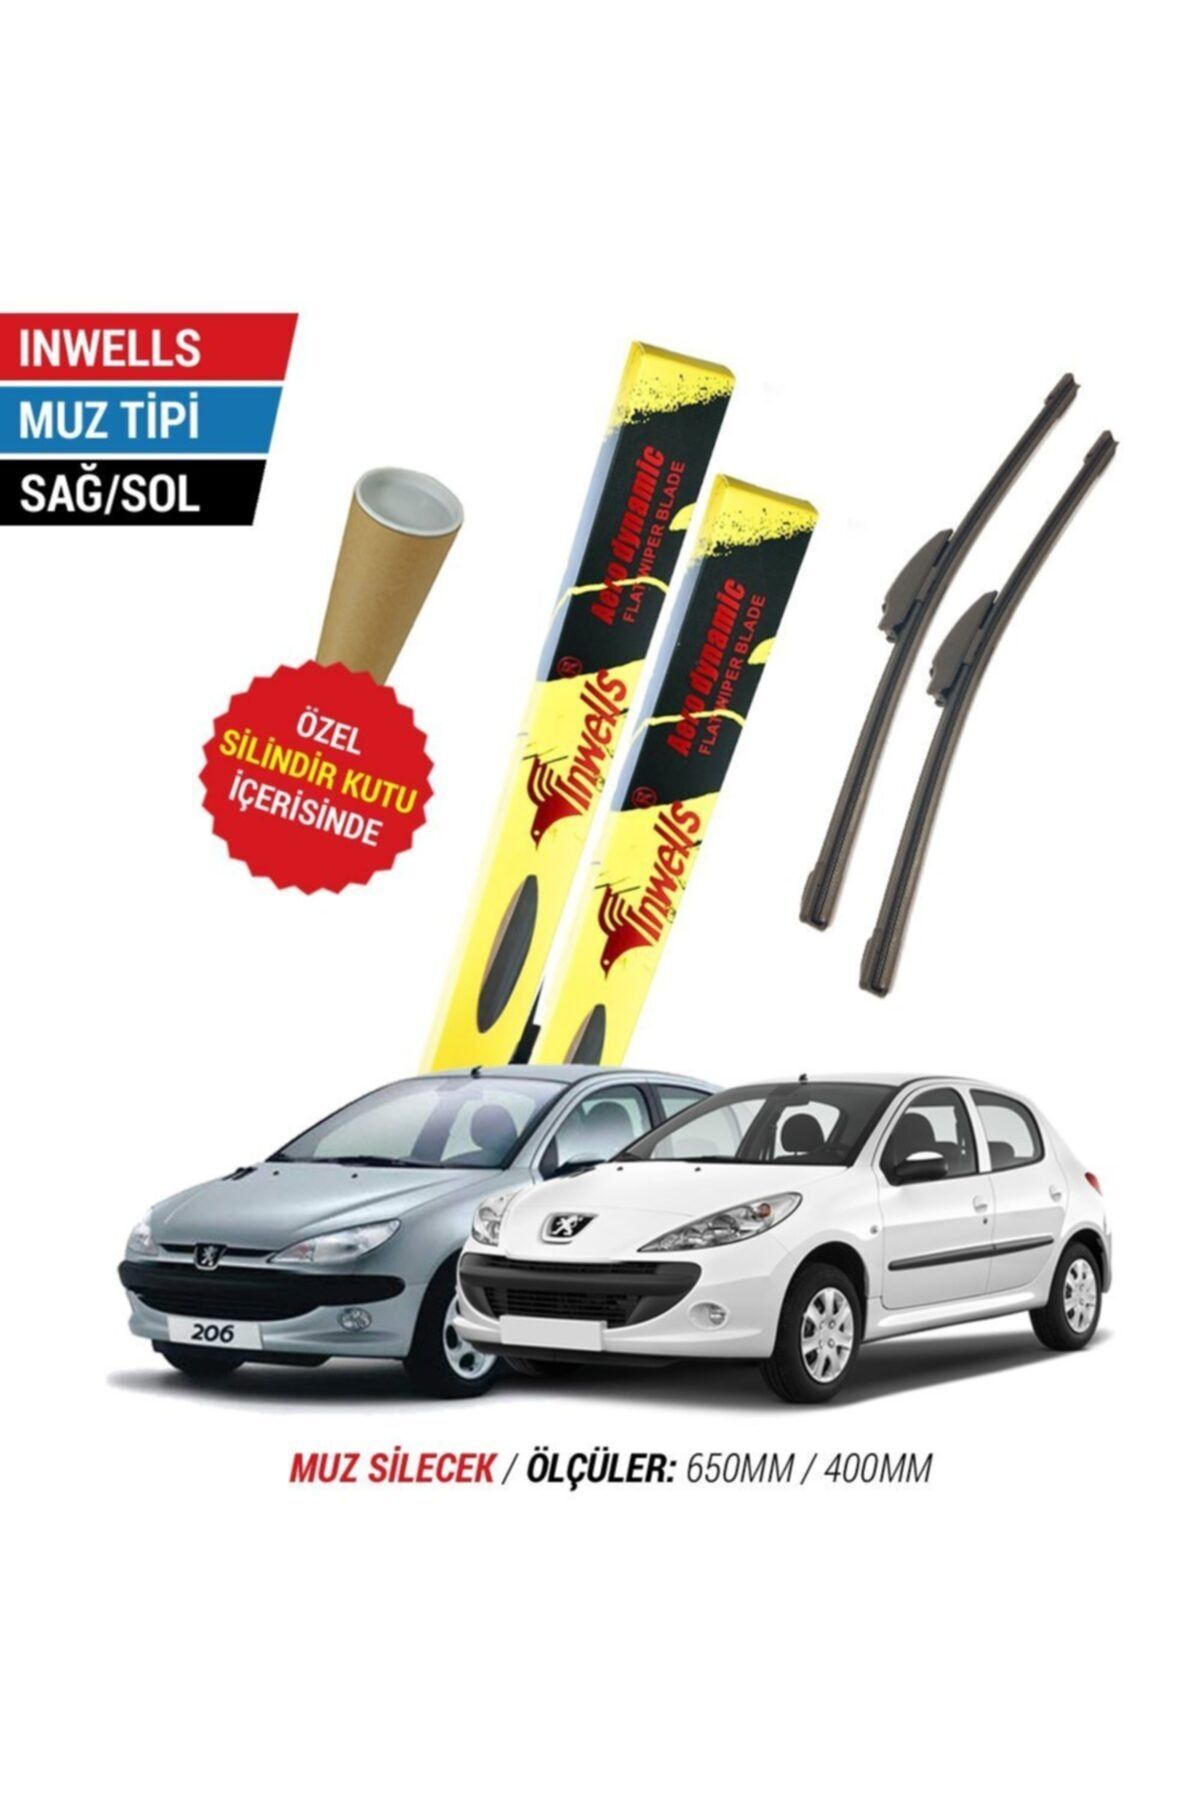 Inwells Peugeot 206 / 206+ Inwells Muz Silecek Takımı (2000-2014)